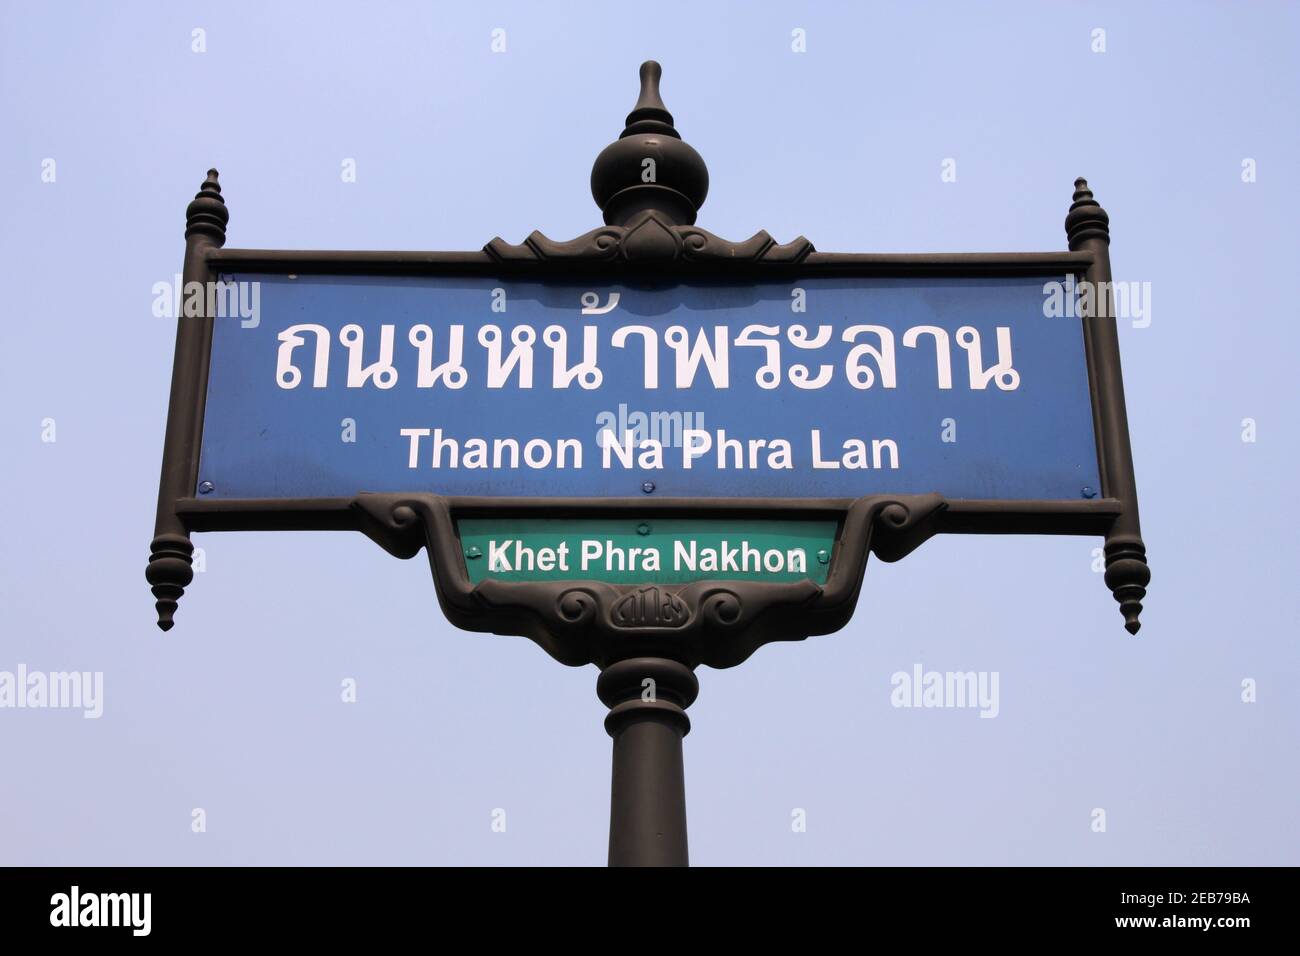 Decorative street name sign in Bangkok, Thailand Stock Photo